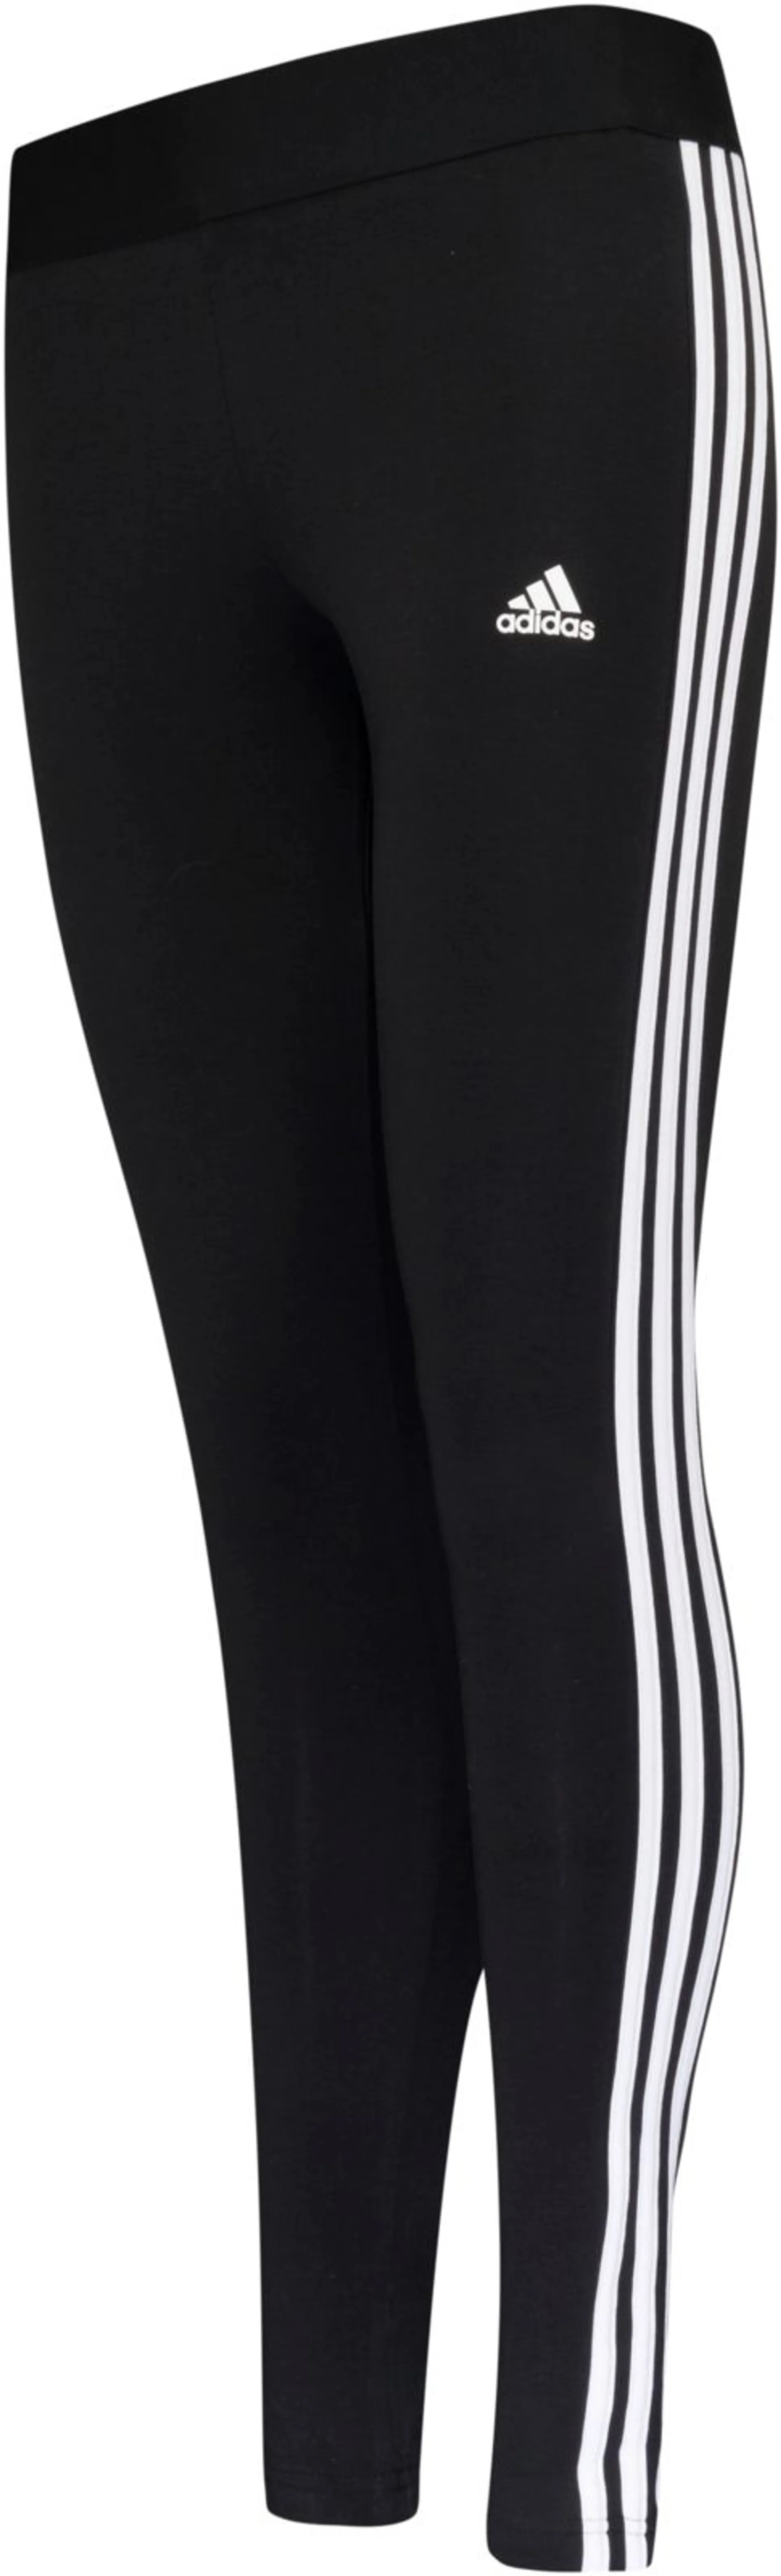 Adidas naisten leggingsit GL0723 - MUSTA